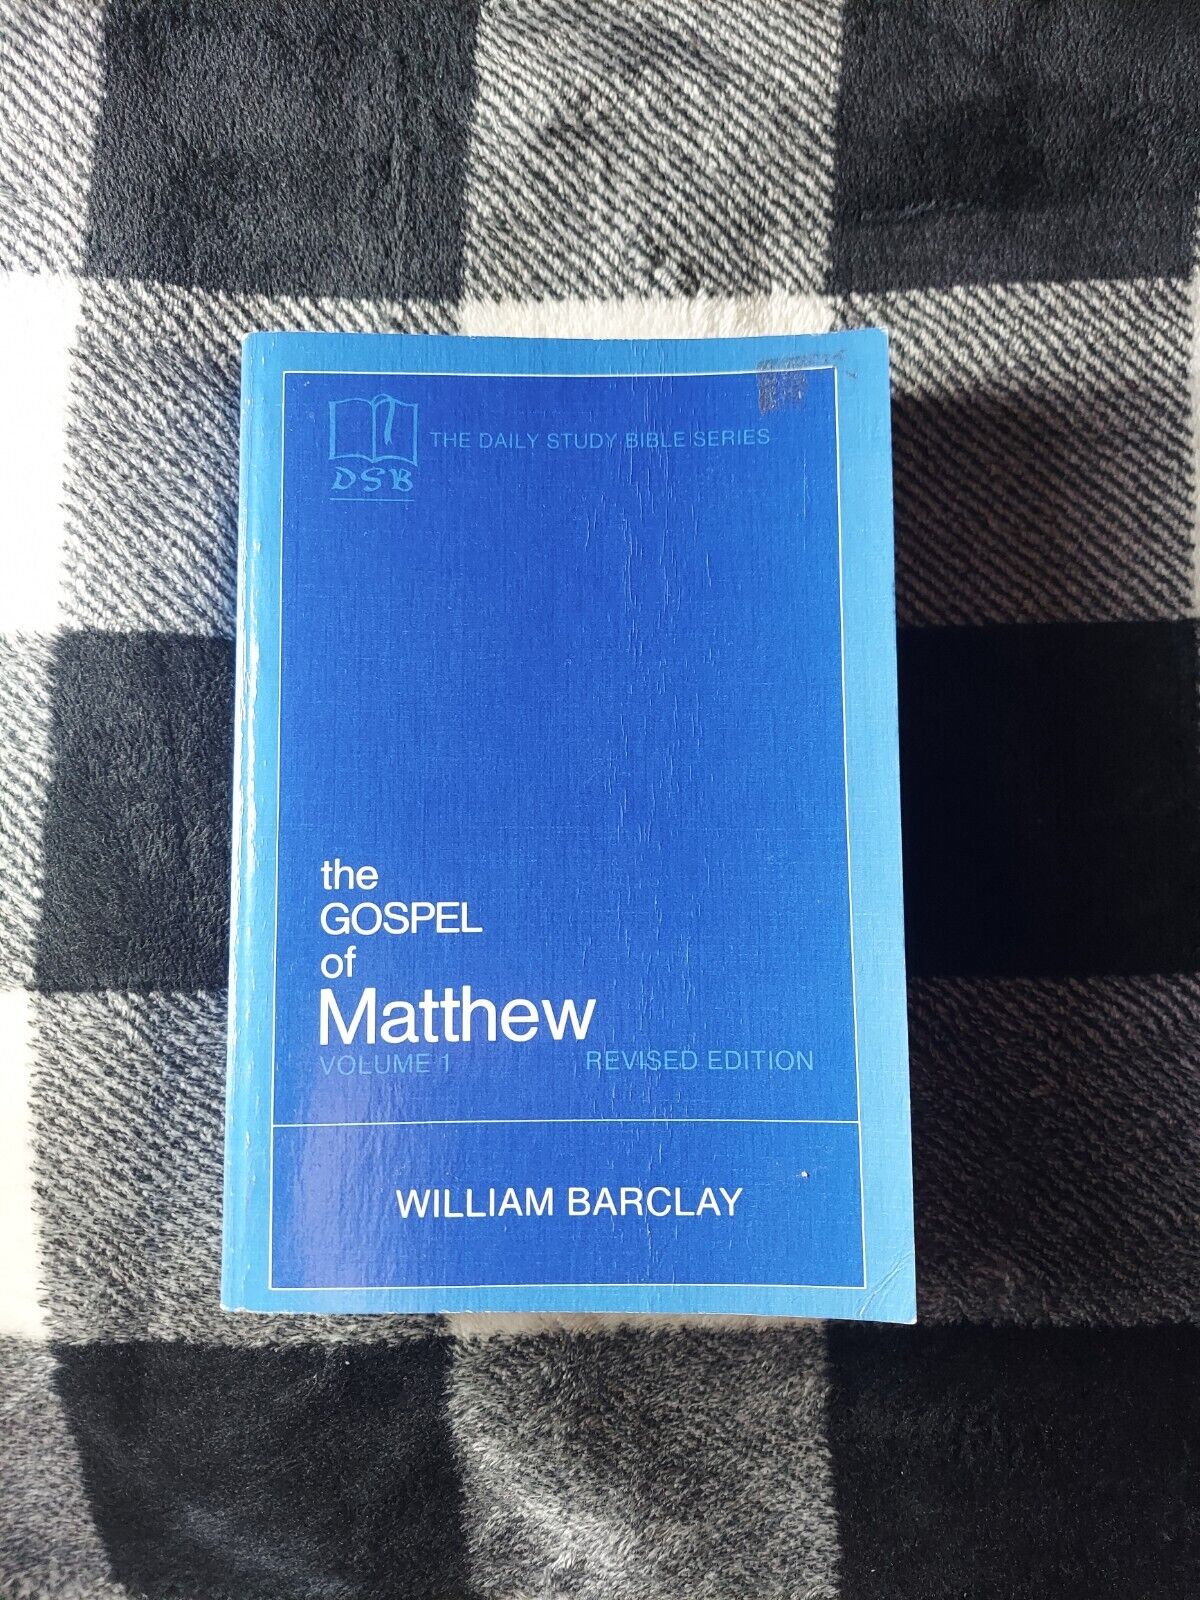 The Daily Study Bible Series THE GOSPEL OF MATTHEW Vol 2 William BARCLAY pb DSB